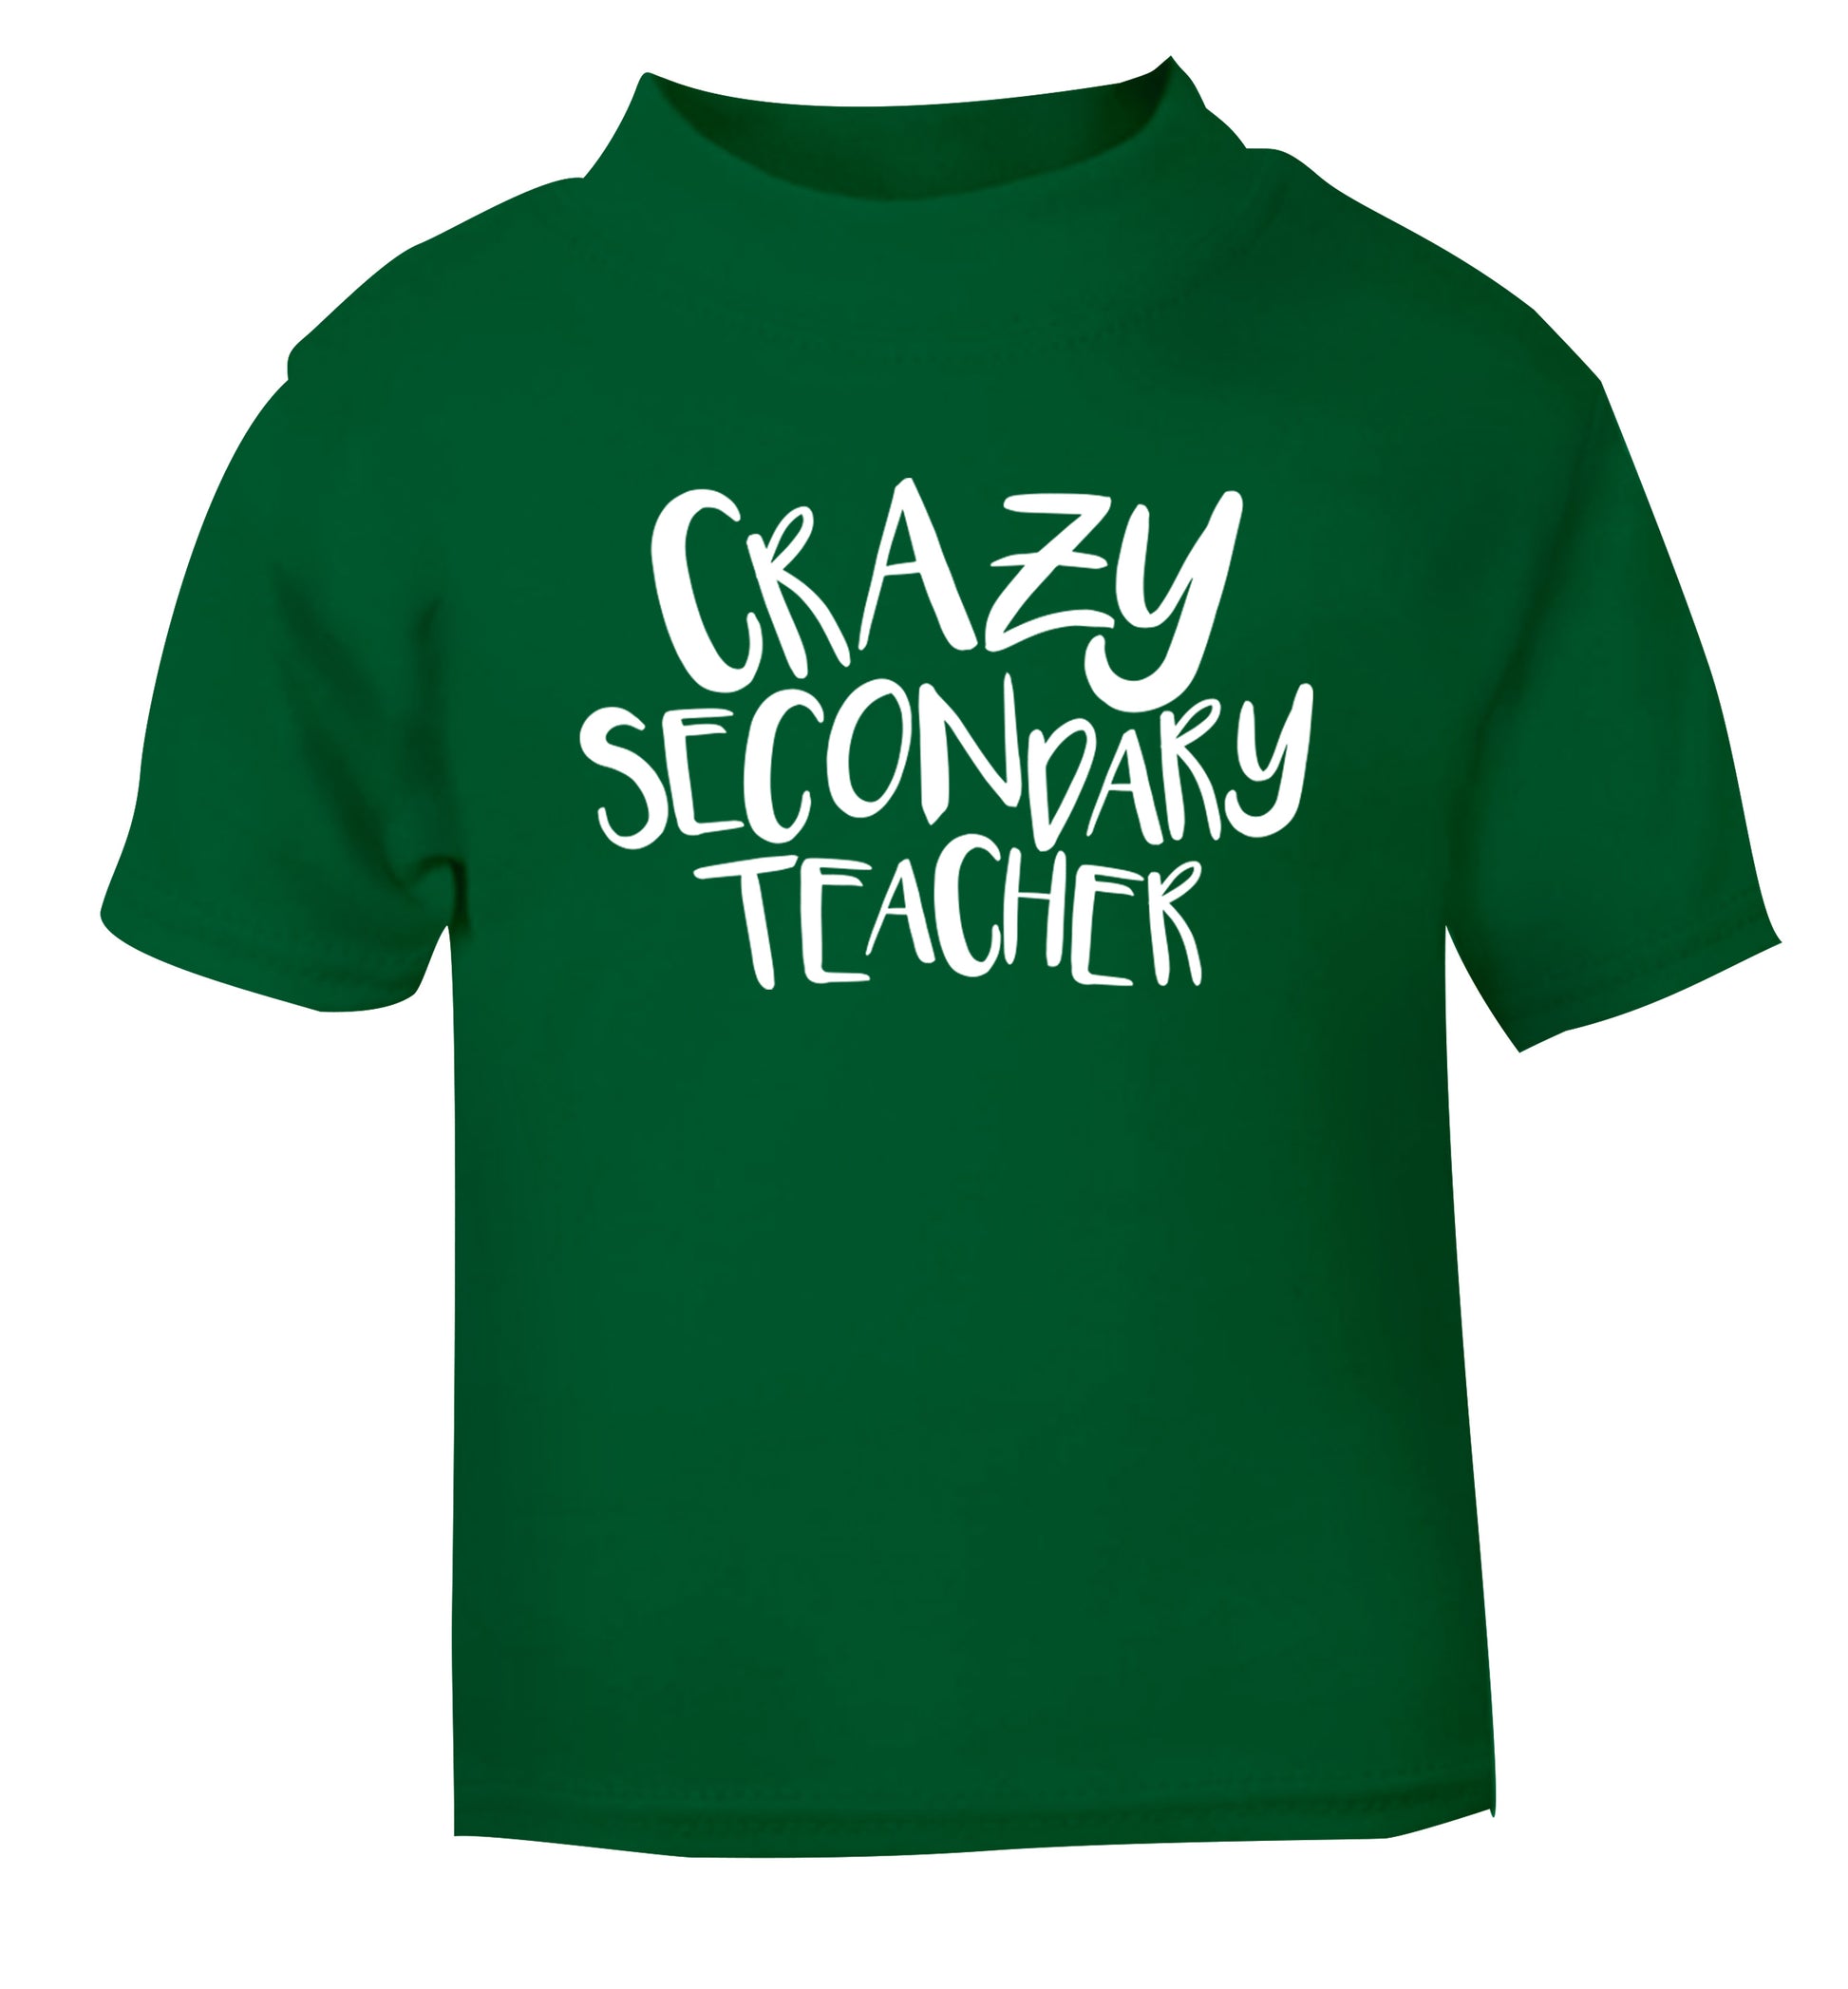 Crazy secondary teacher green Baby Toddler Tshirt 2 Years